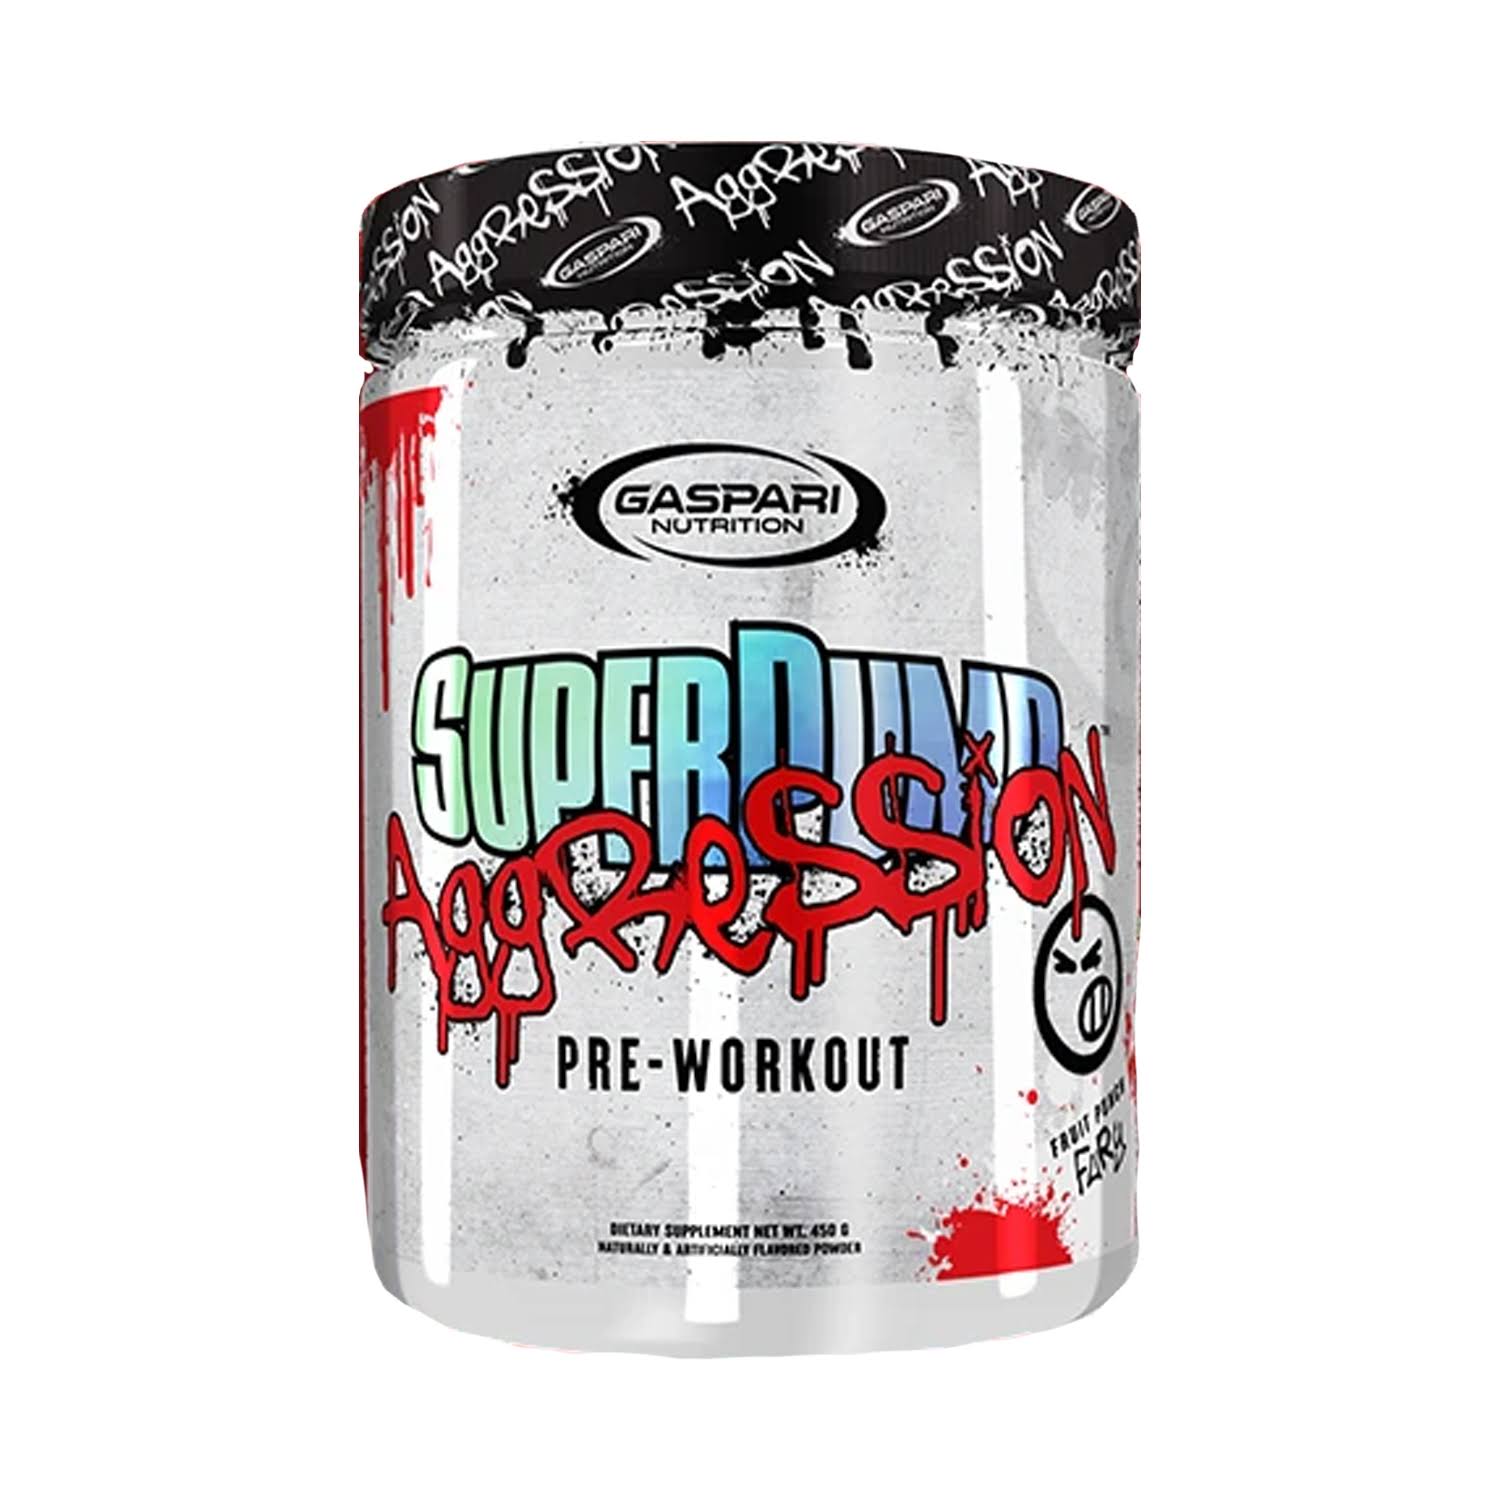 Gaspari Nutrition SuperPump Aggression Pre-Workout Fruit Punch Fury 450 G